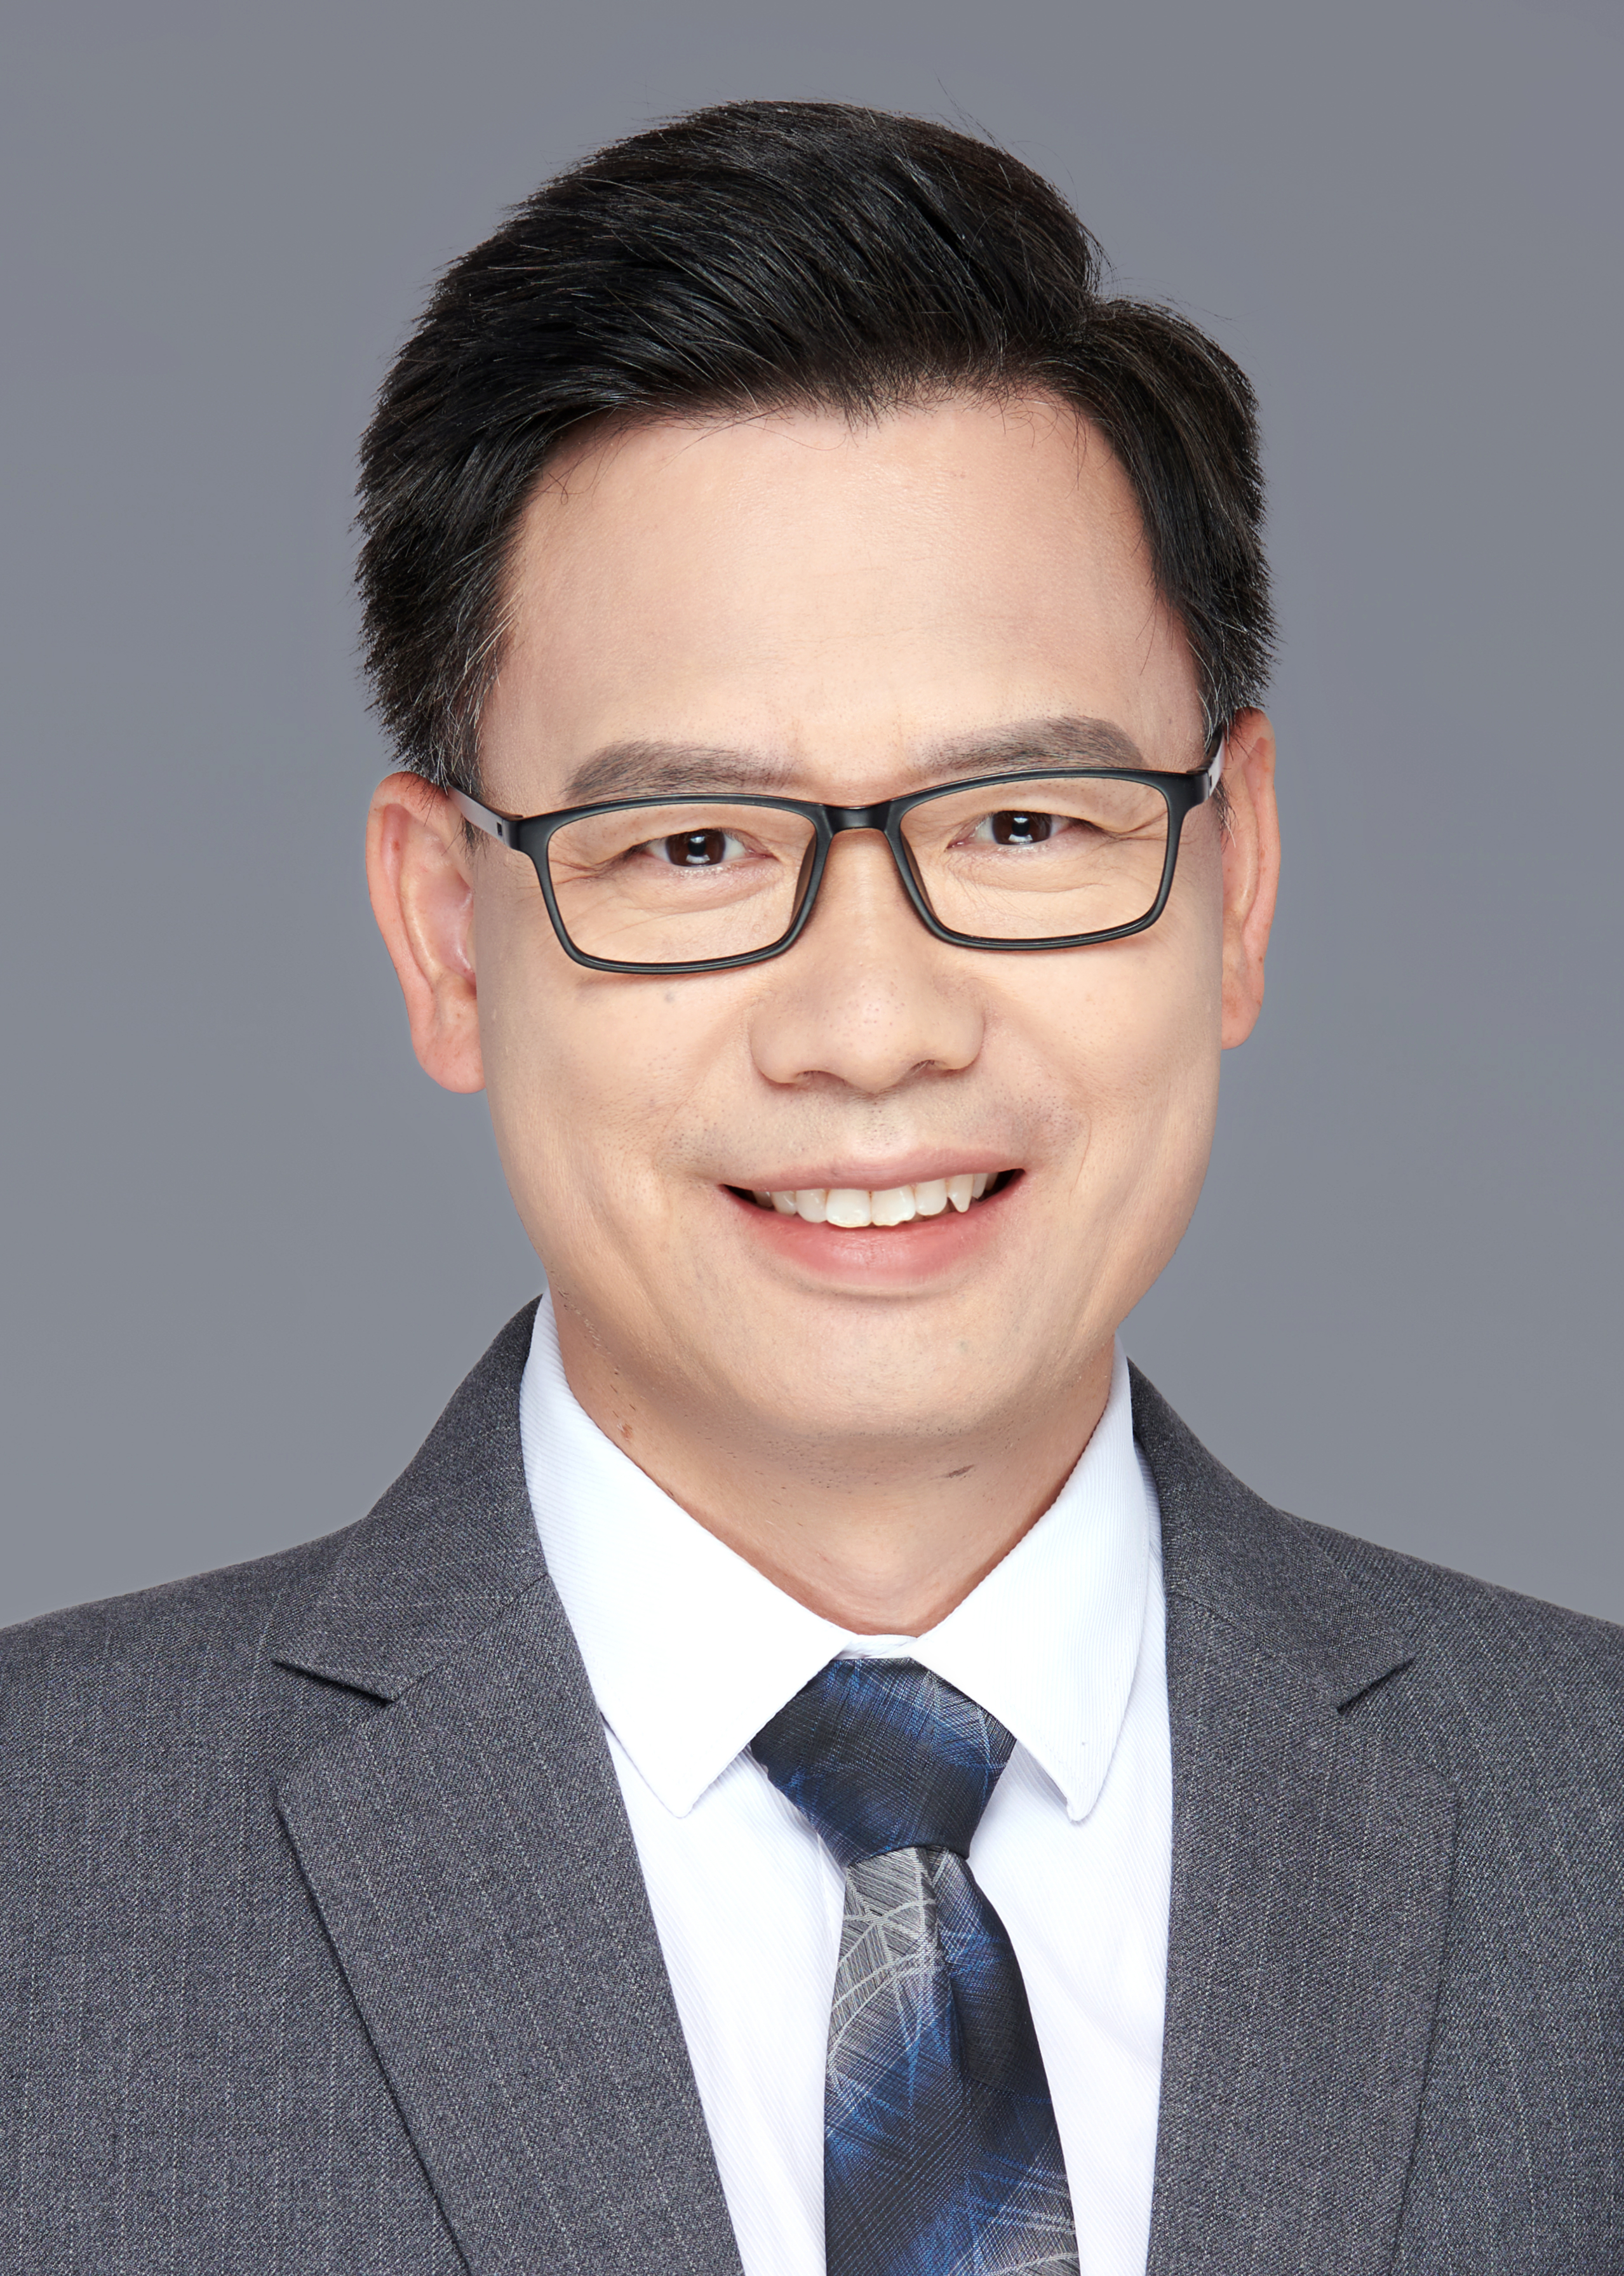 Tao Wu, an entrepreneurship mentor at Marietta College